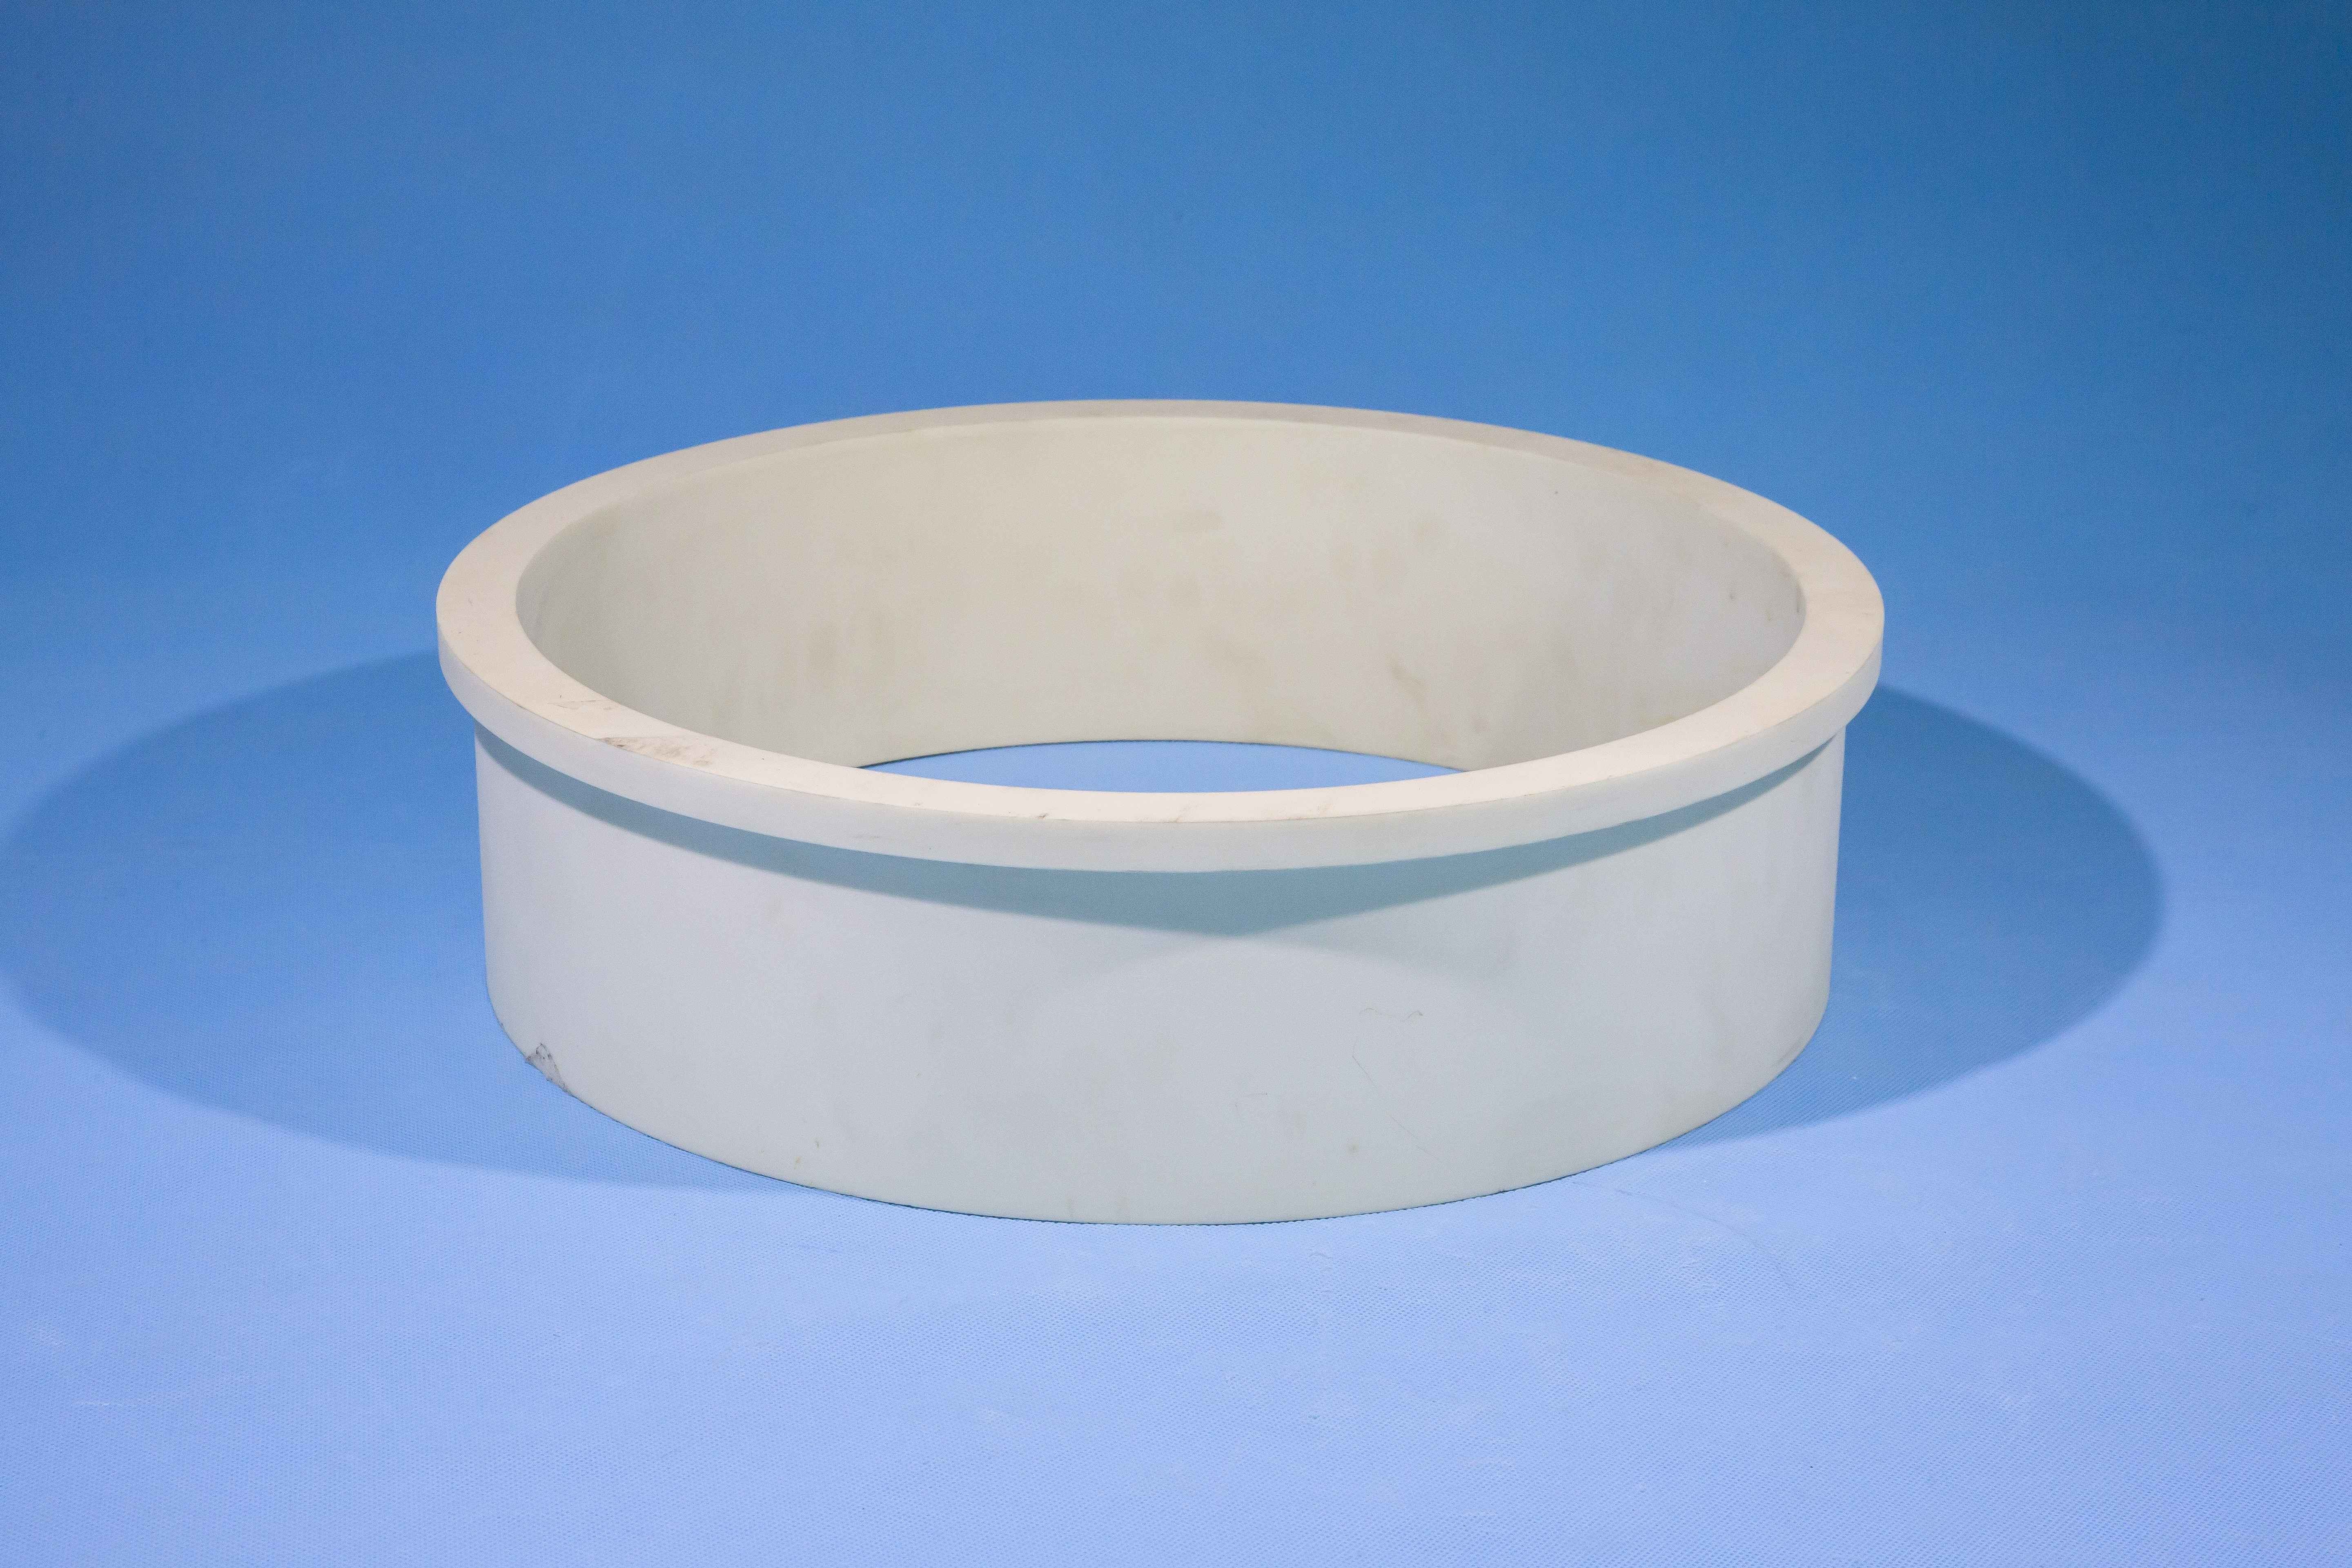 Wholesale High Temperature Al2O3 Ceramic Fiber Gasket , Precision Machining Ceramic  Rings from china suppliers